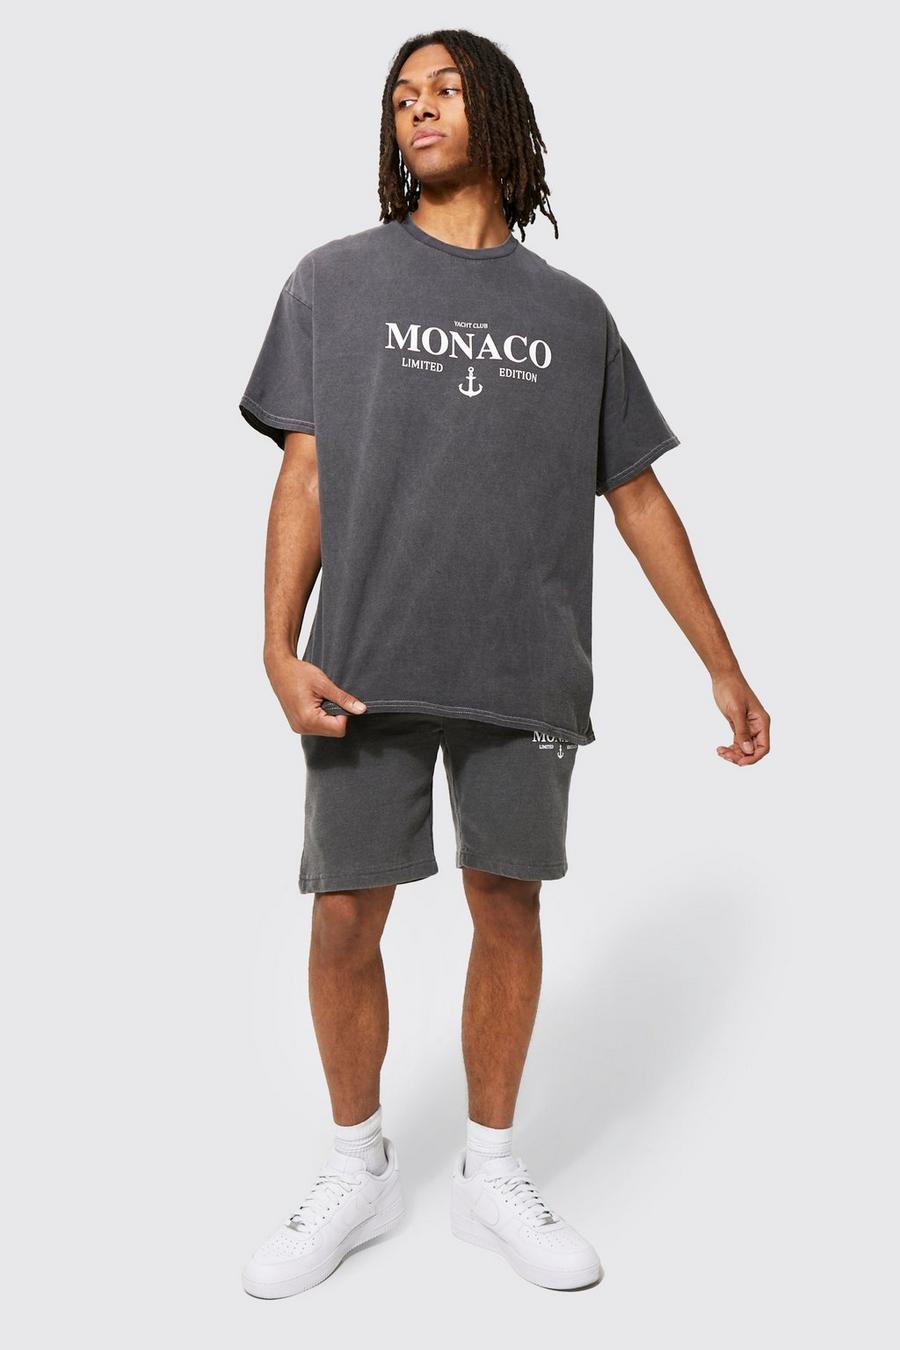 Charcoal grå Monaco Oversize t-shirt och shorts